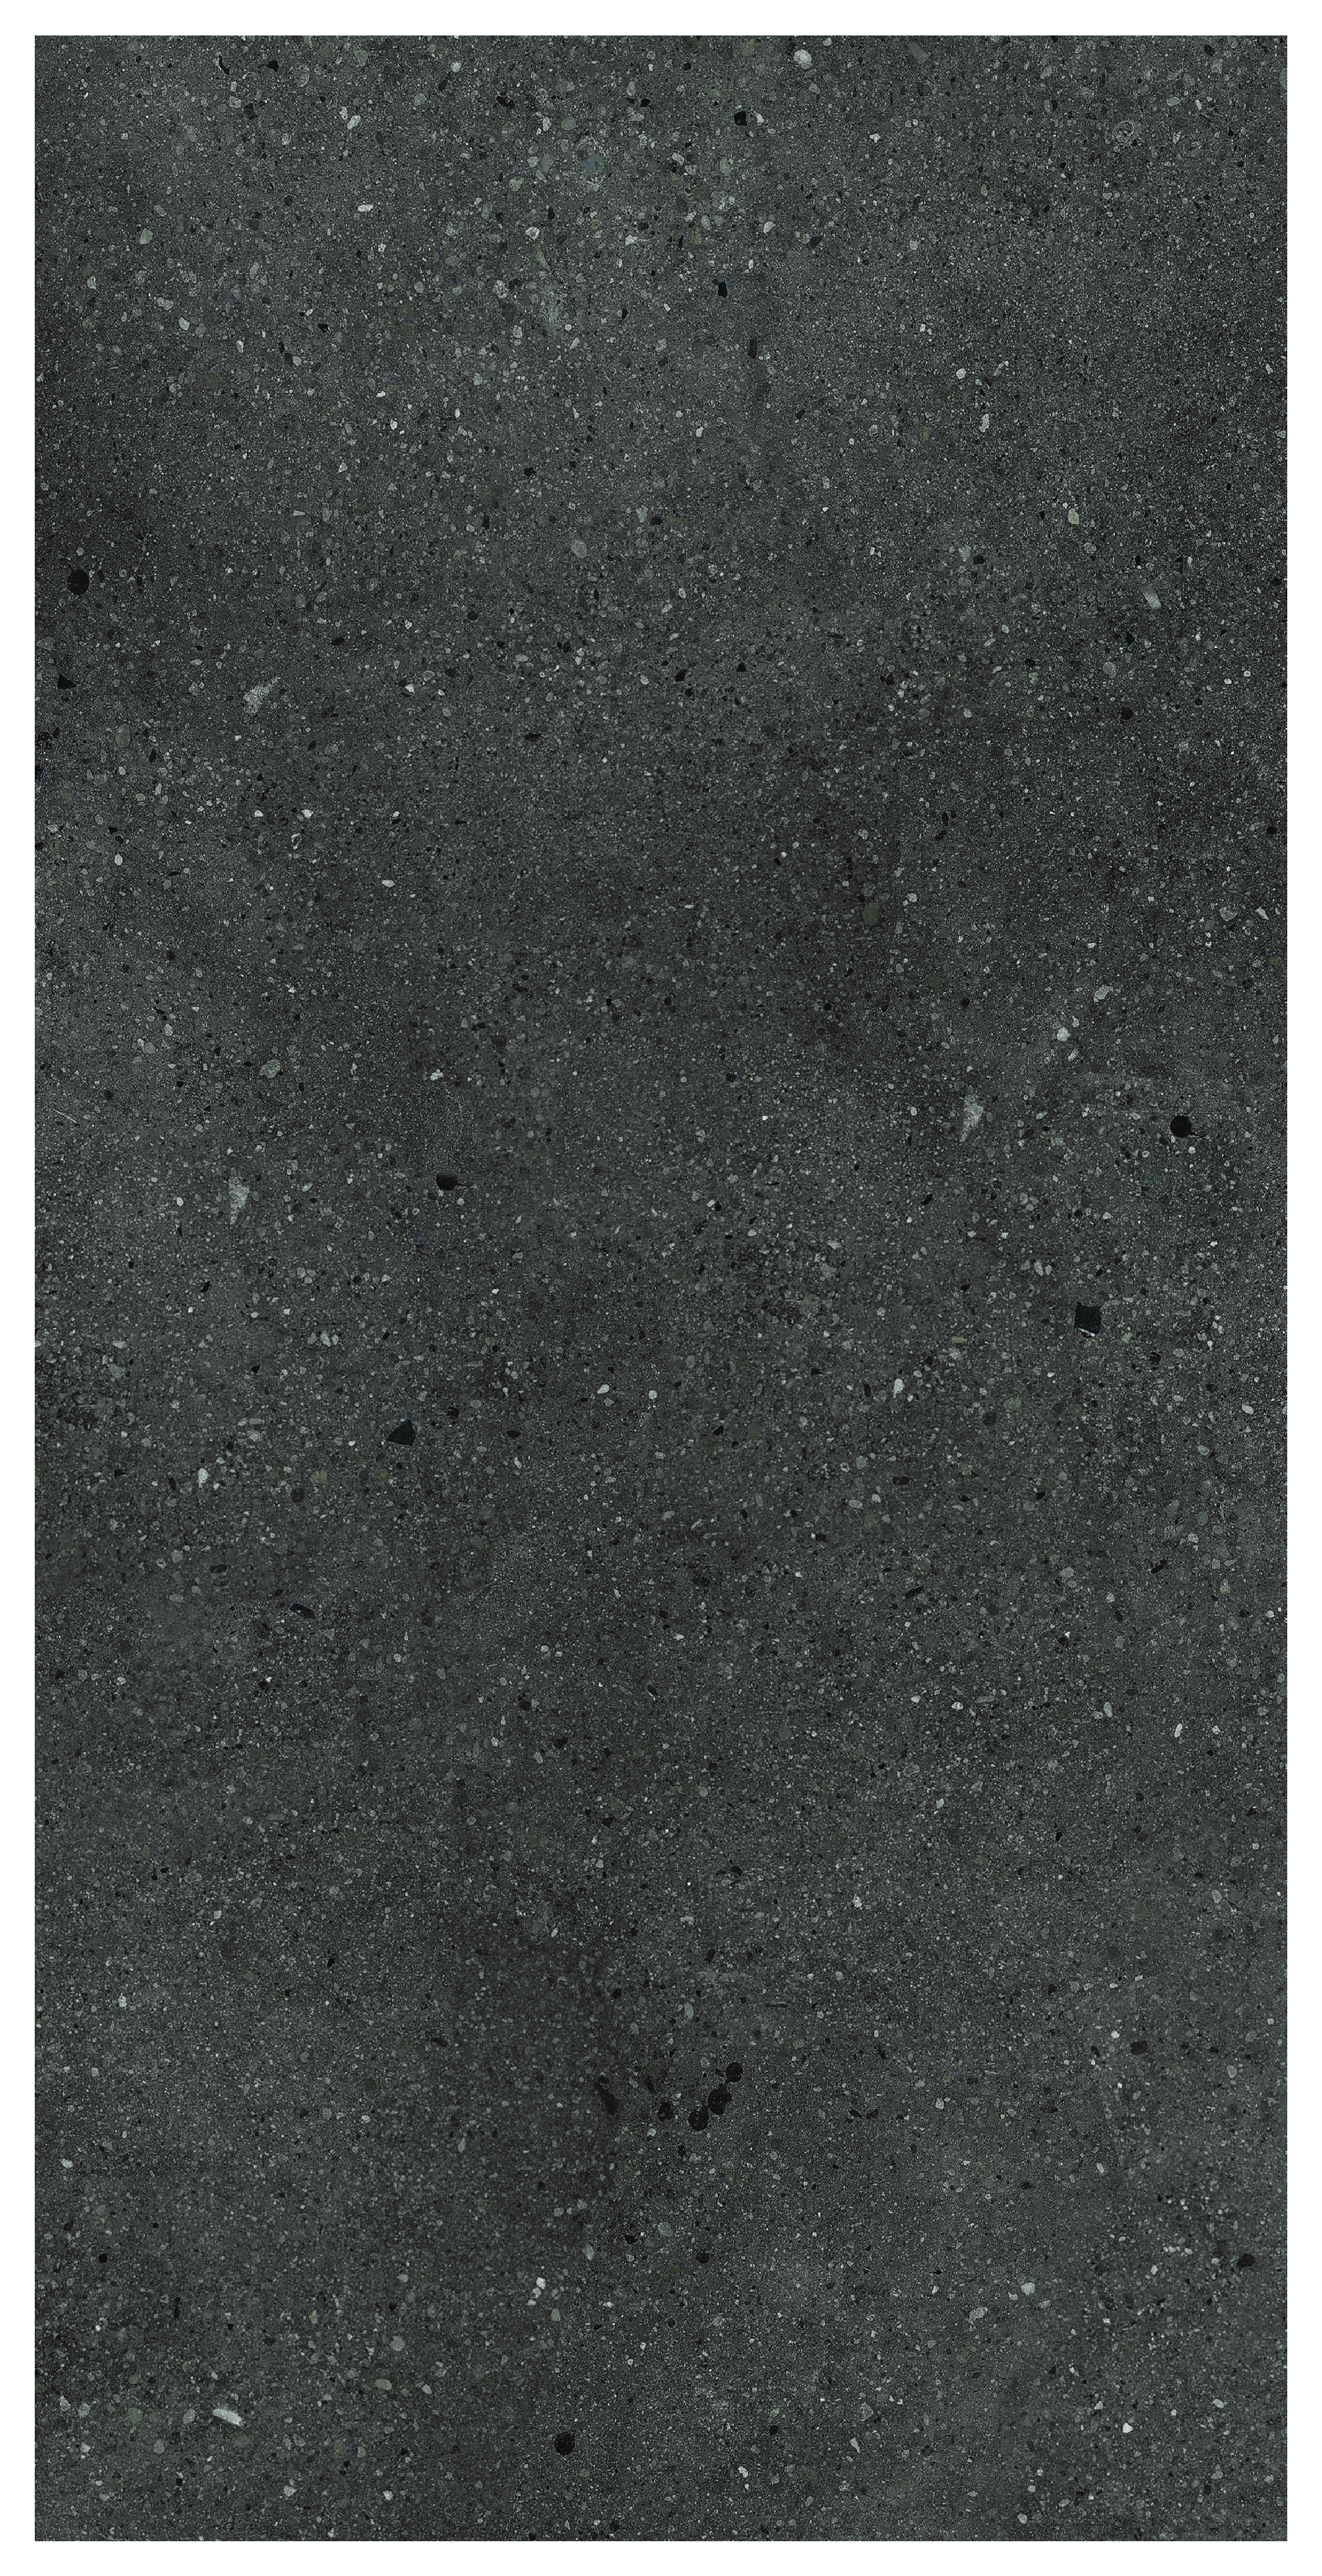 Roman Concrete Anthracite SPC Flooring with Integrated Underlay - Sample